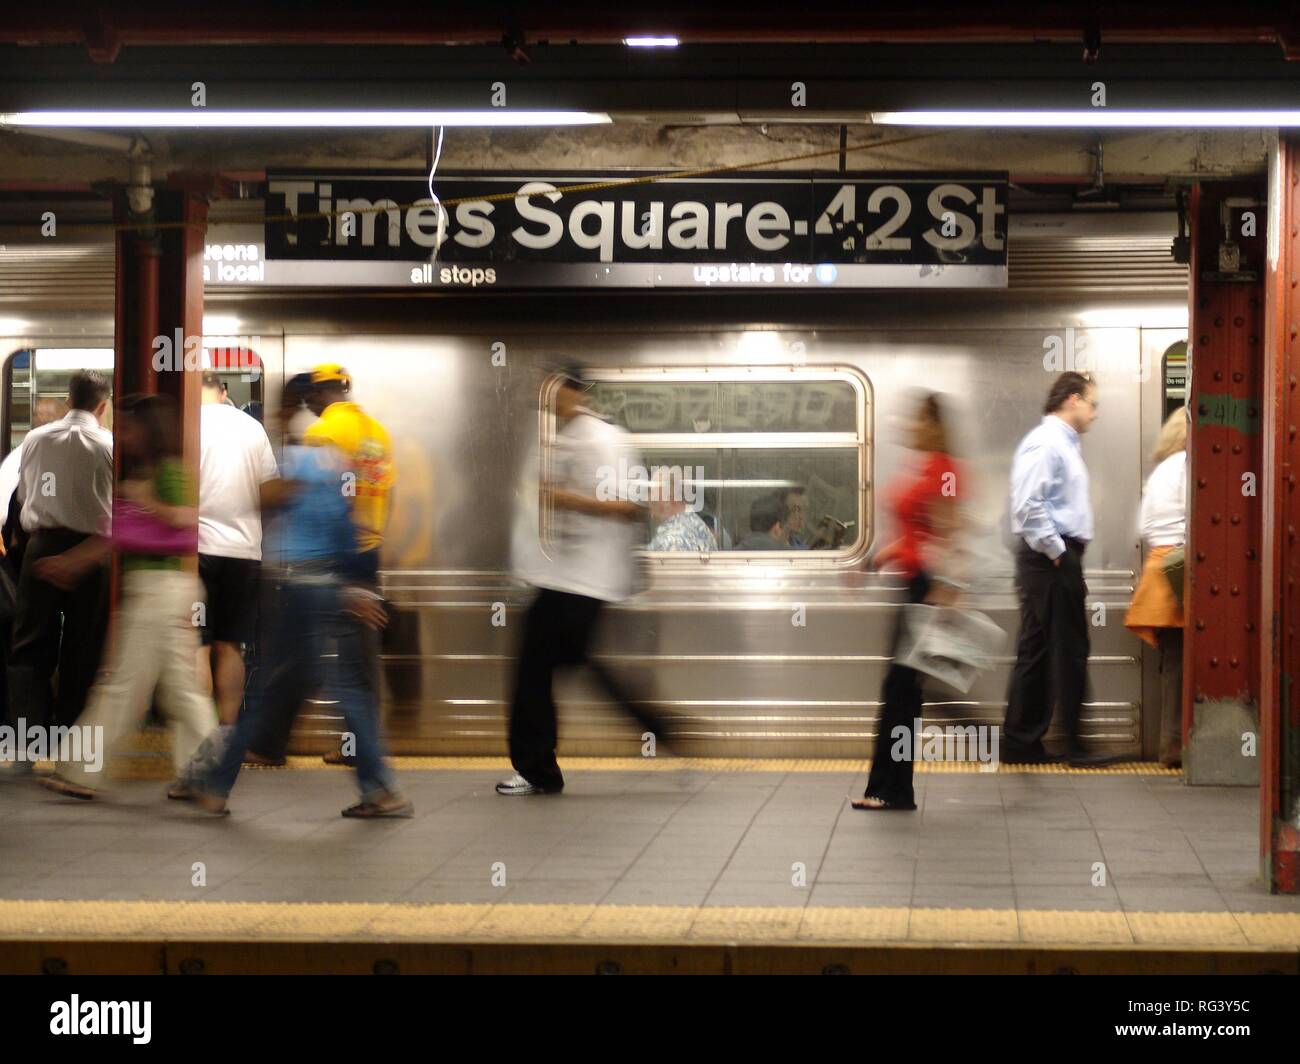 USA, United States of America, New York City: New York Subway. Subway station imes Square, 42nd Street. Stock Photo